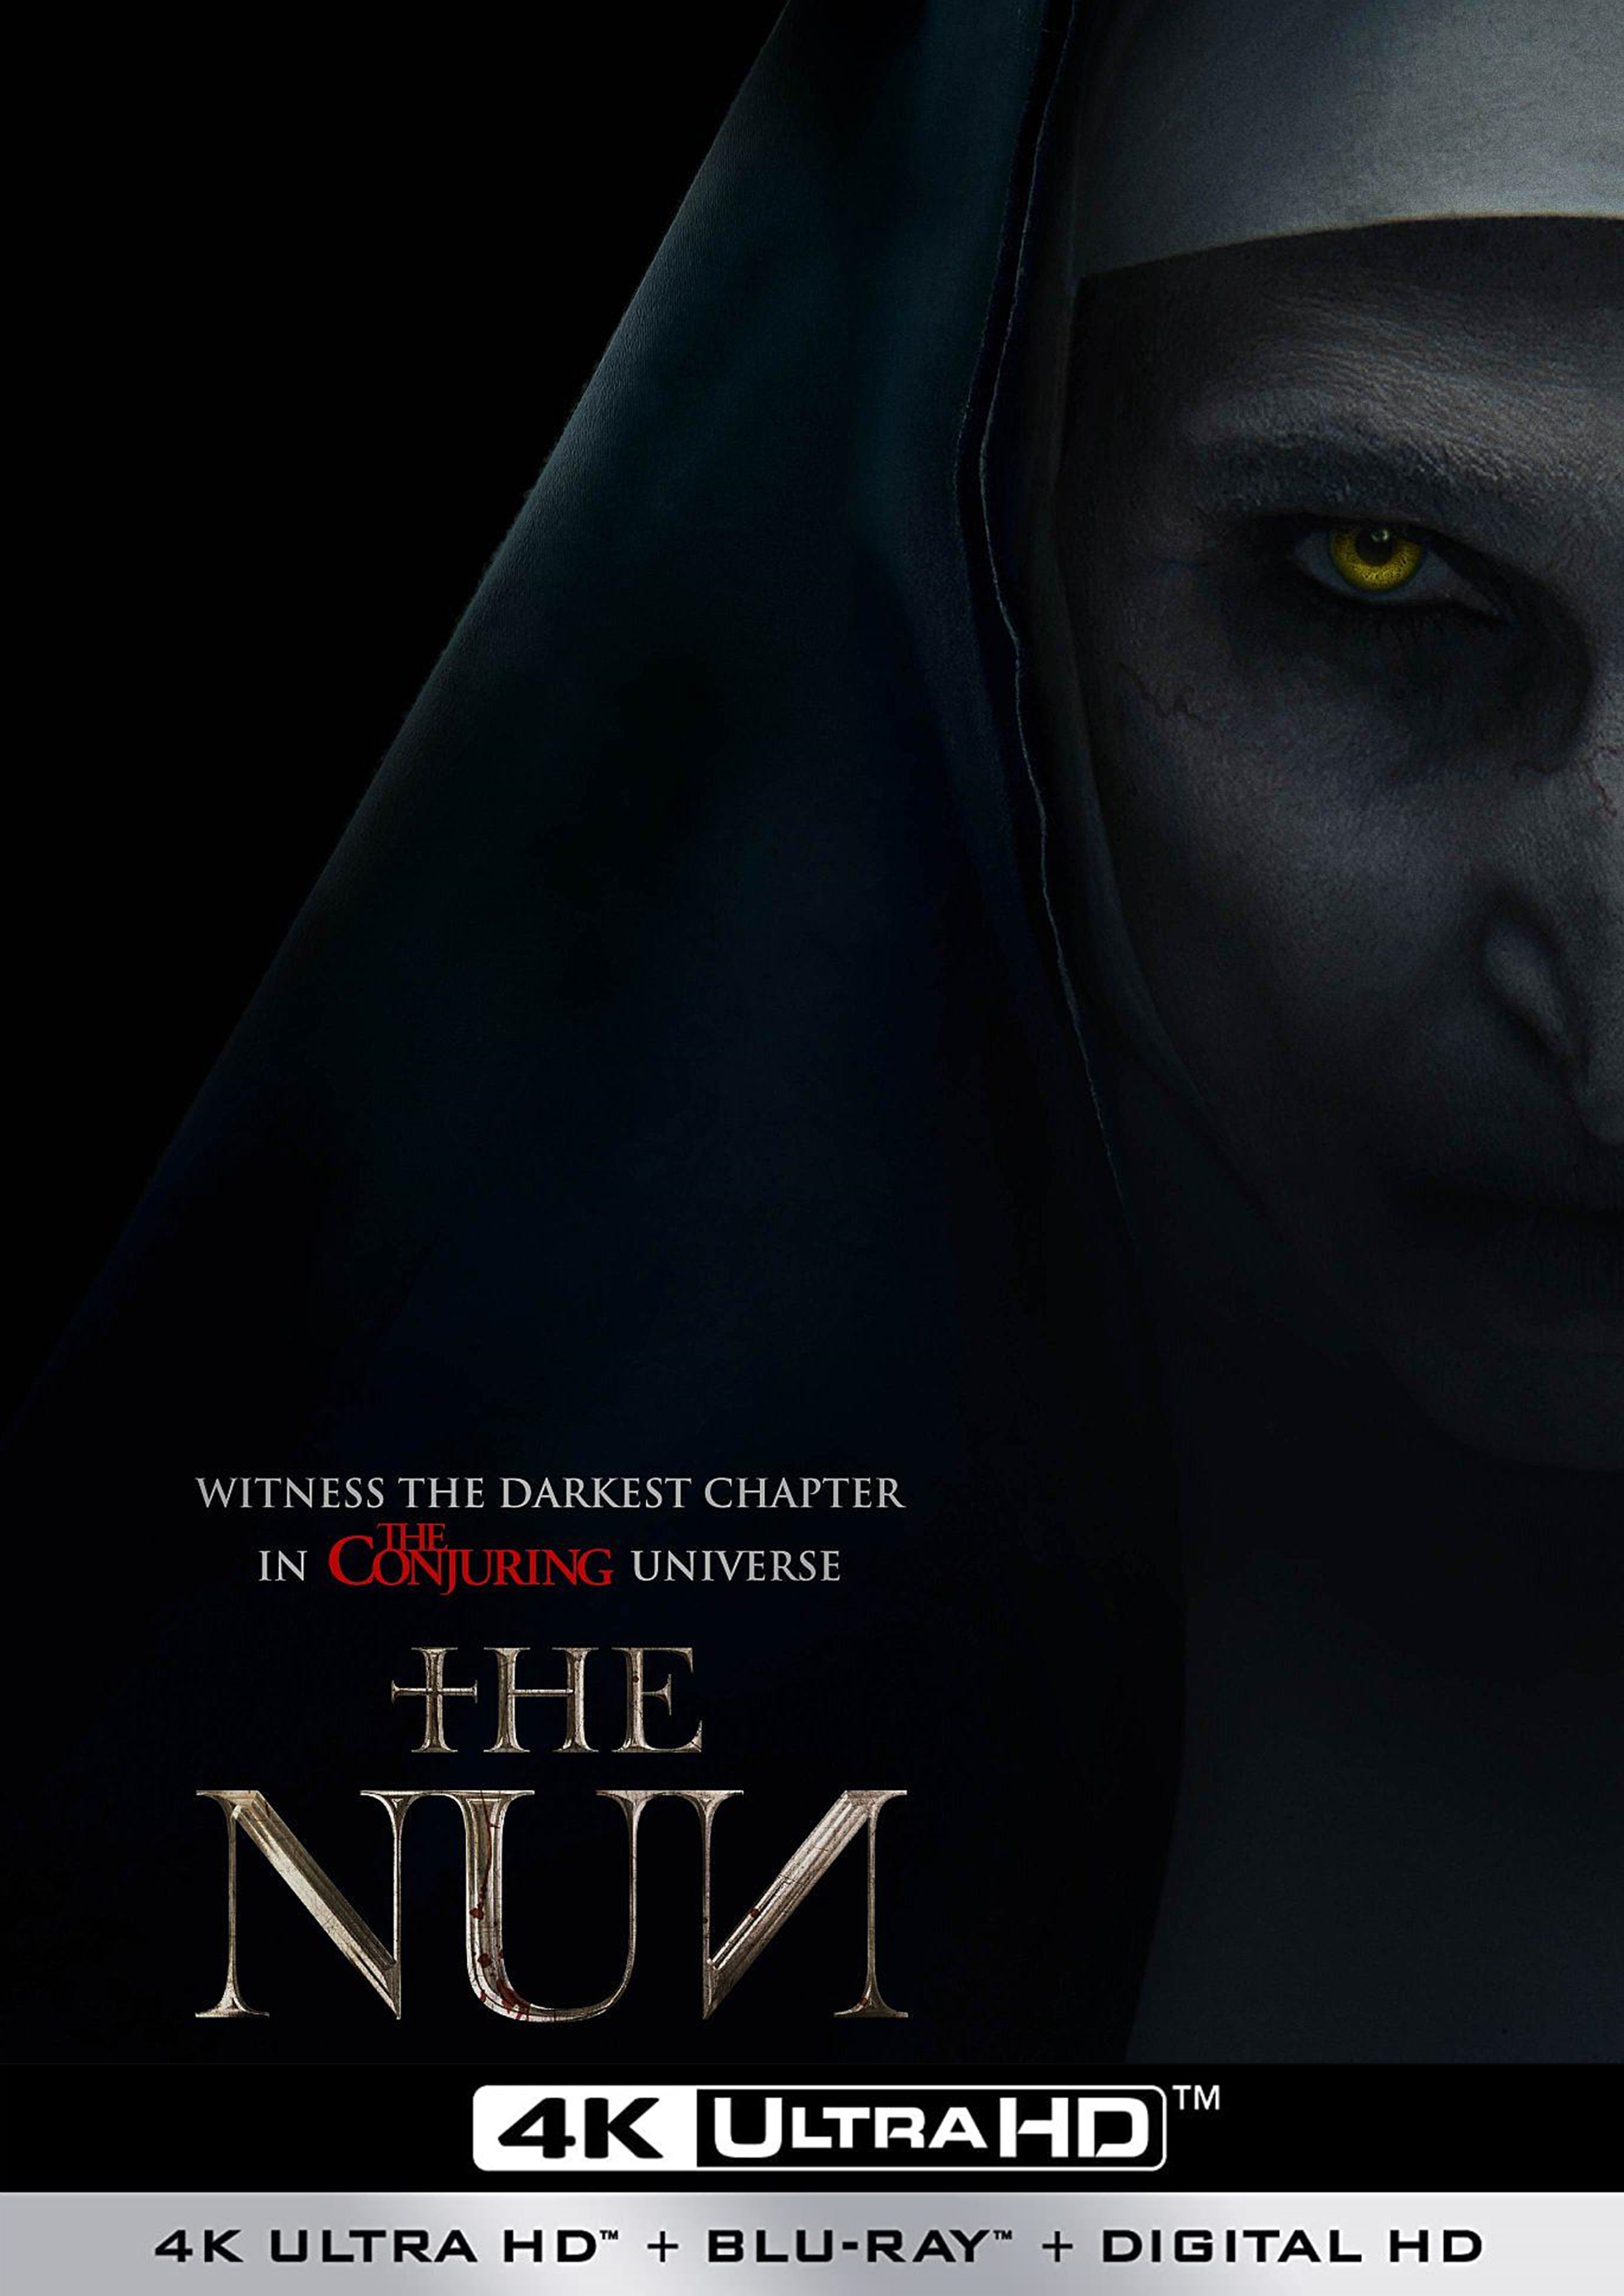 Stiahni si UHD Filmy Sestra / The Nun (2018)(CZ/EN)(2160p 4K BRRemux) = CSFD 57%